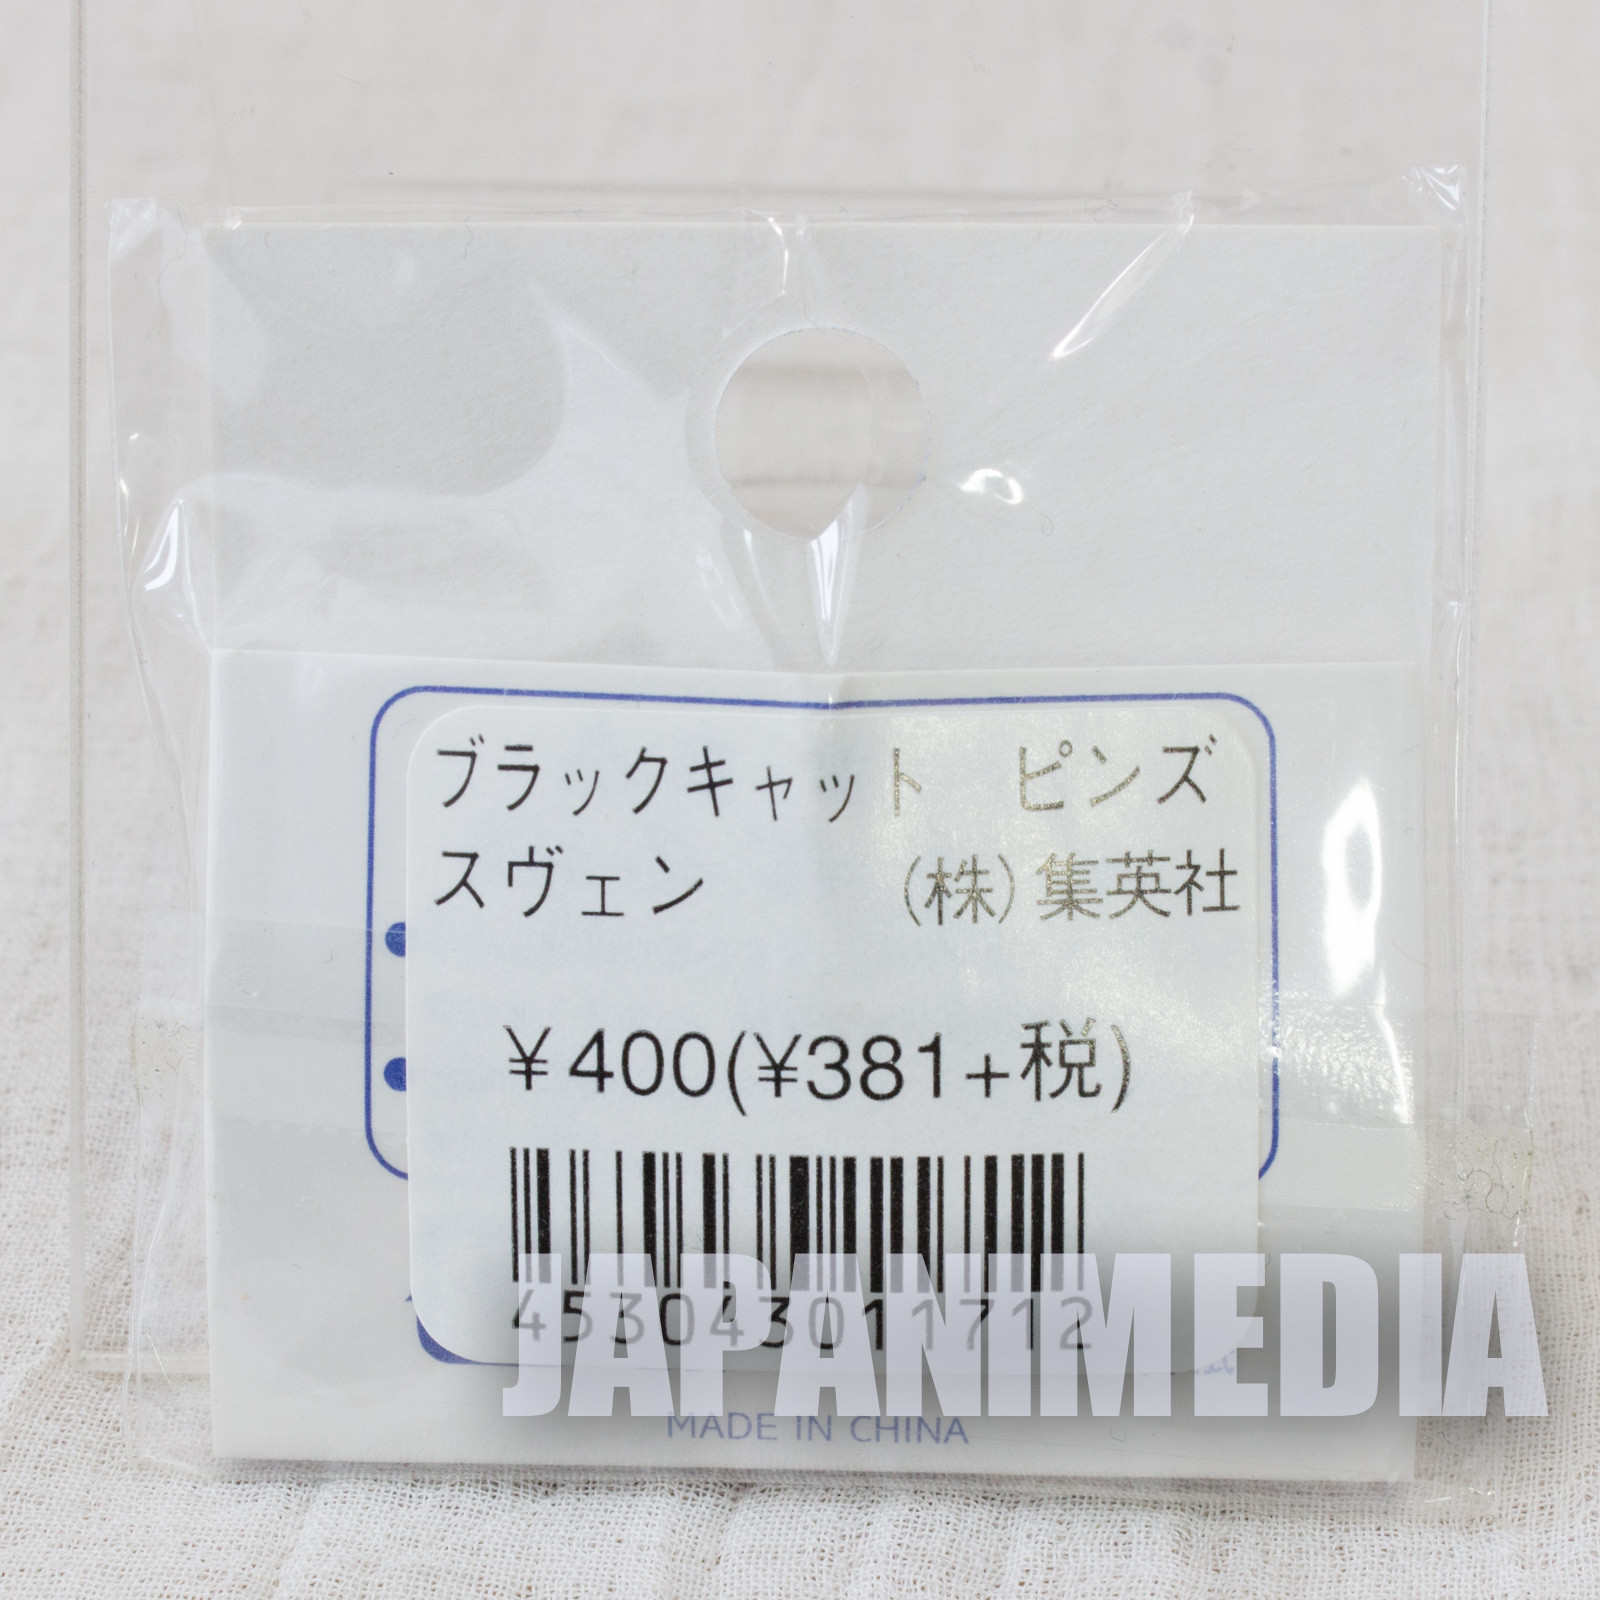 Black Cat Sven Vollfied Character Pins JAPAN ANIME SHONEN JUMP #1